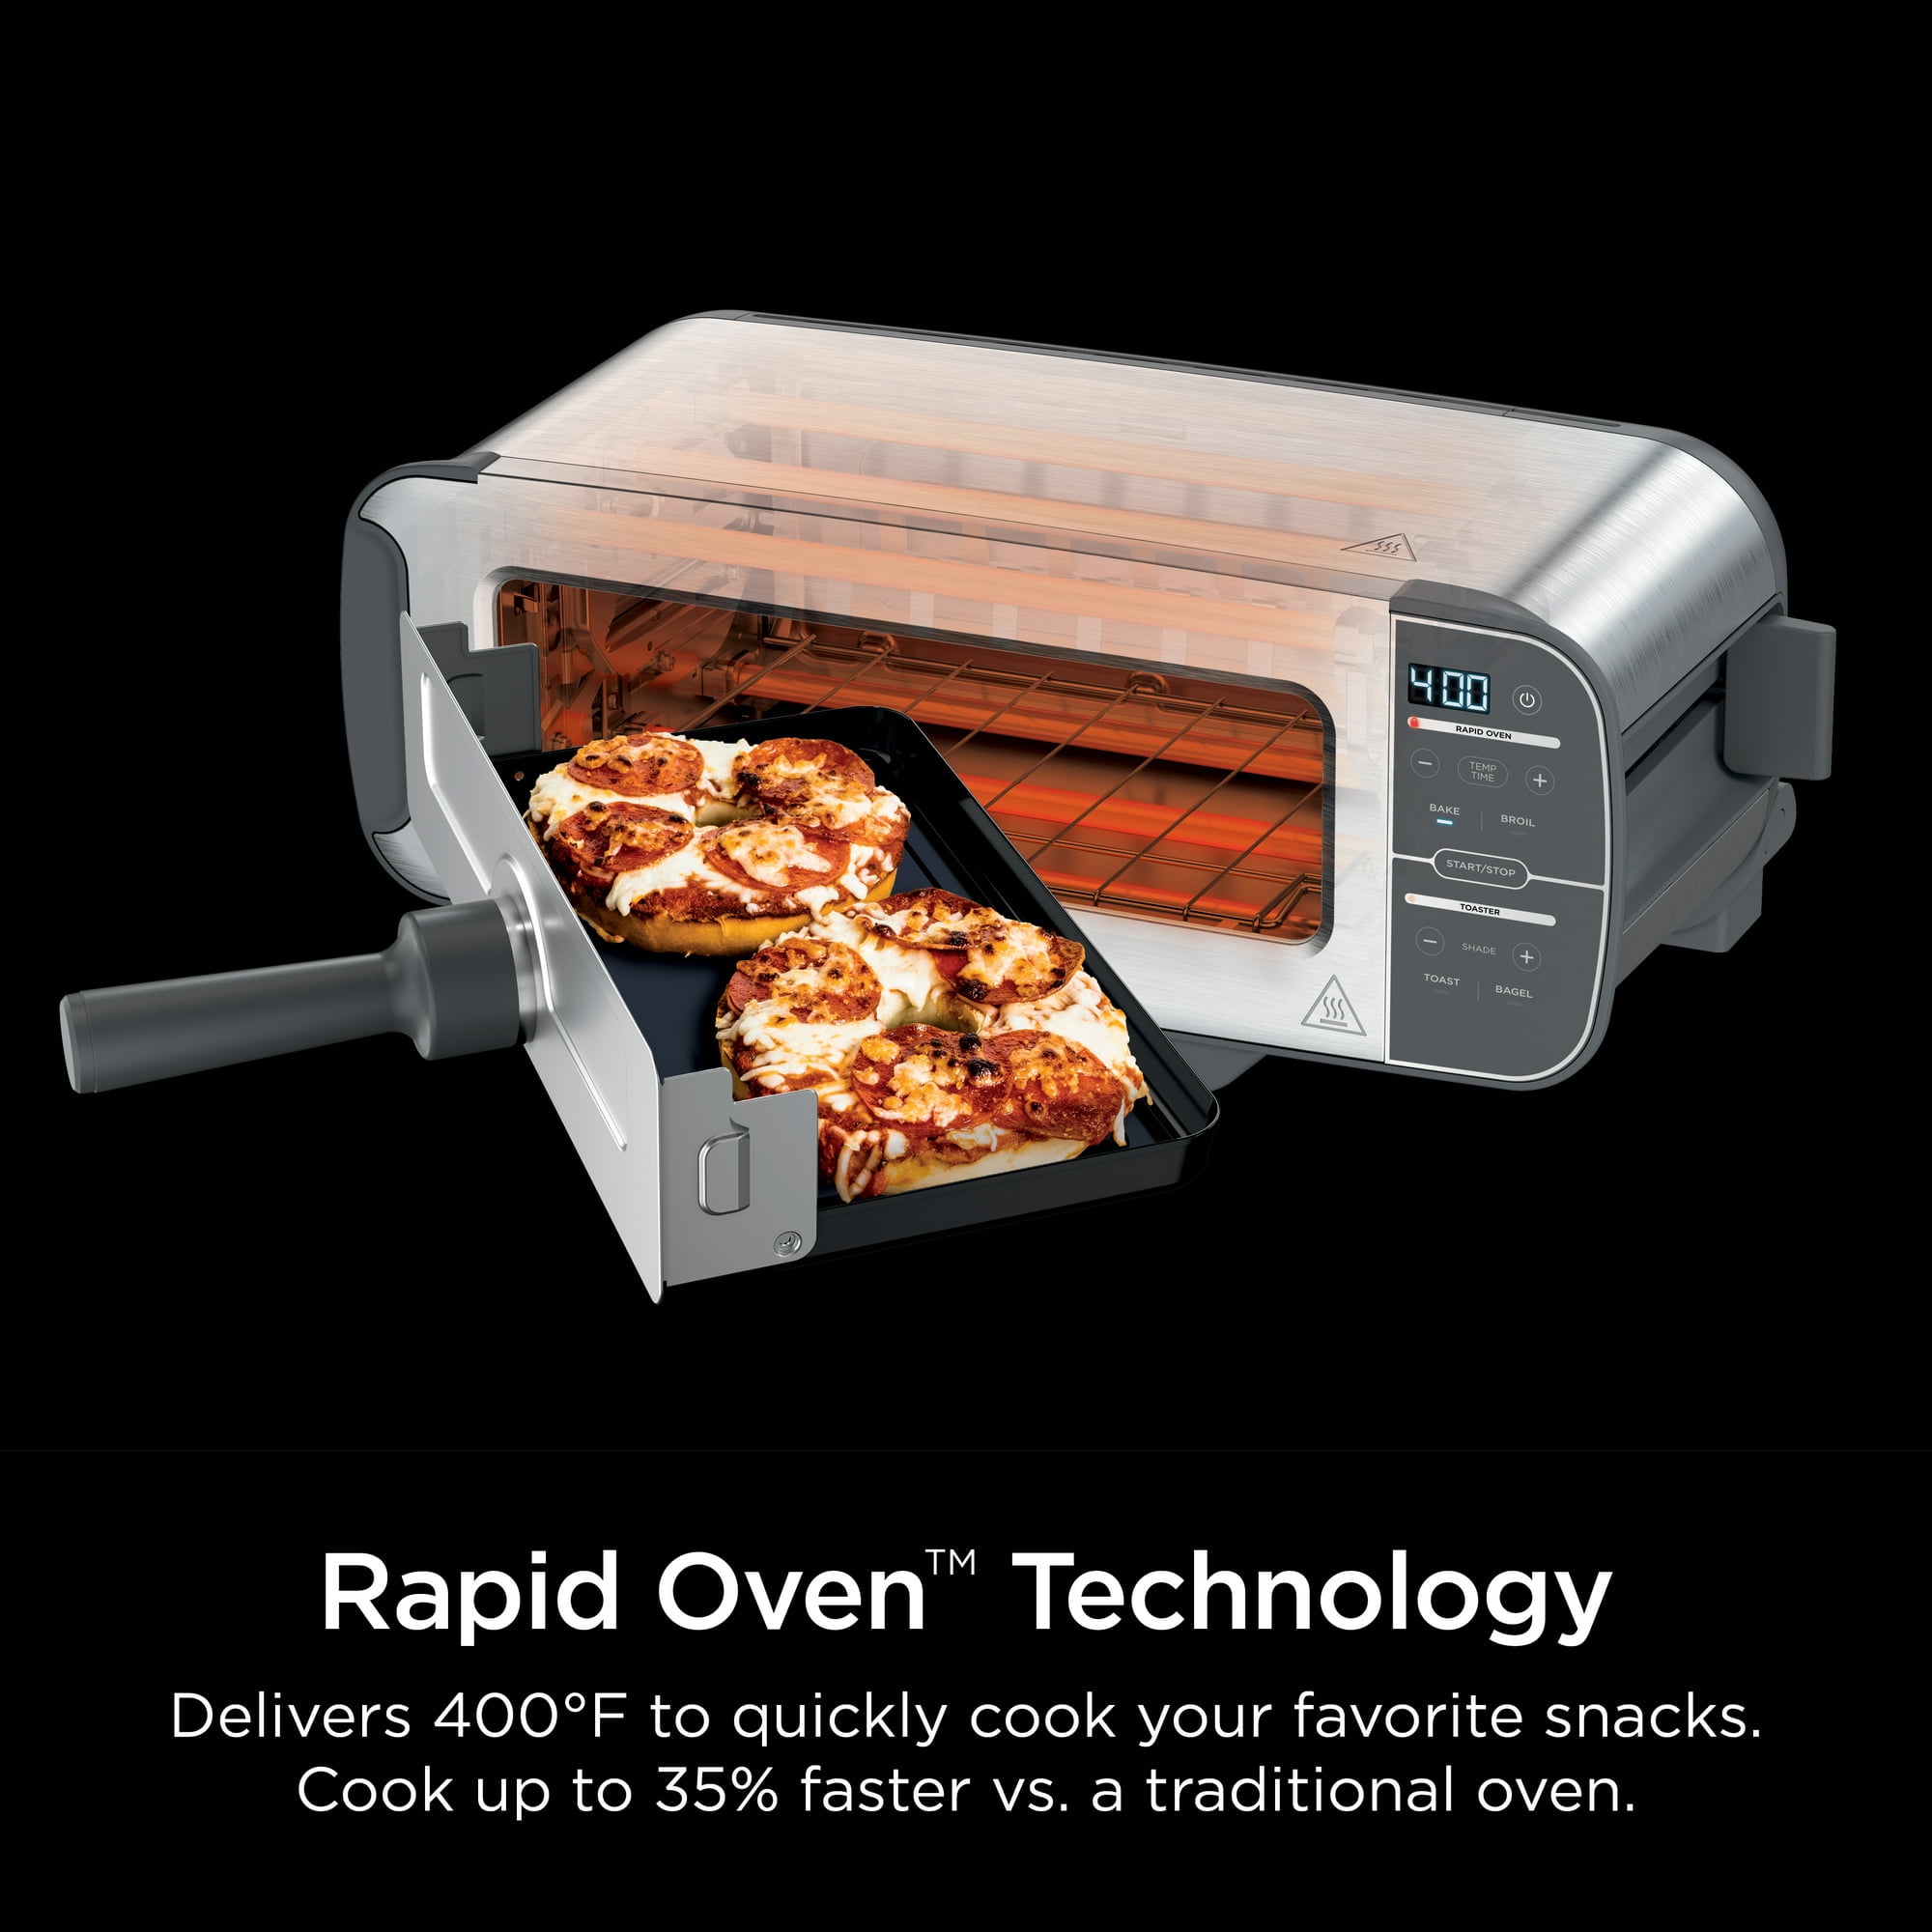 Ninja® Foodi 2-in-1 Flip Toaster & Reviews